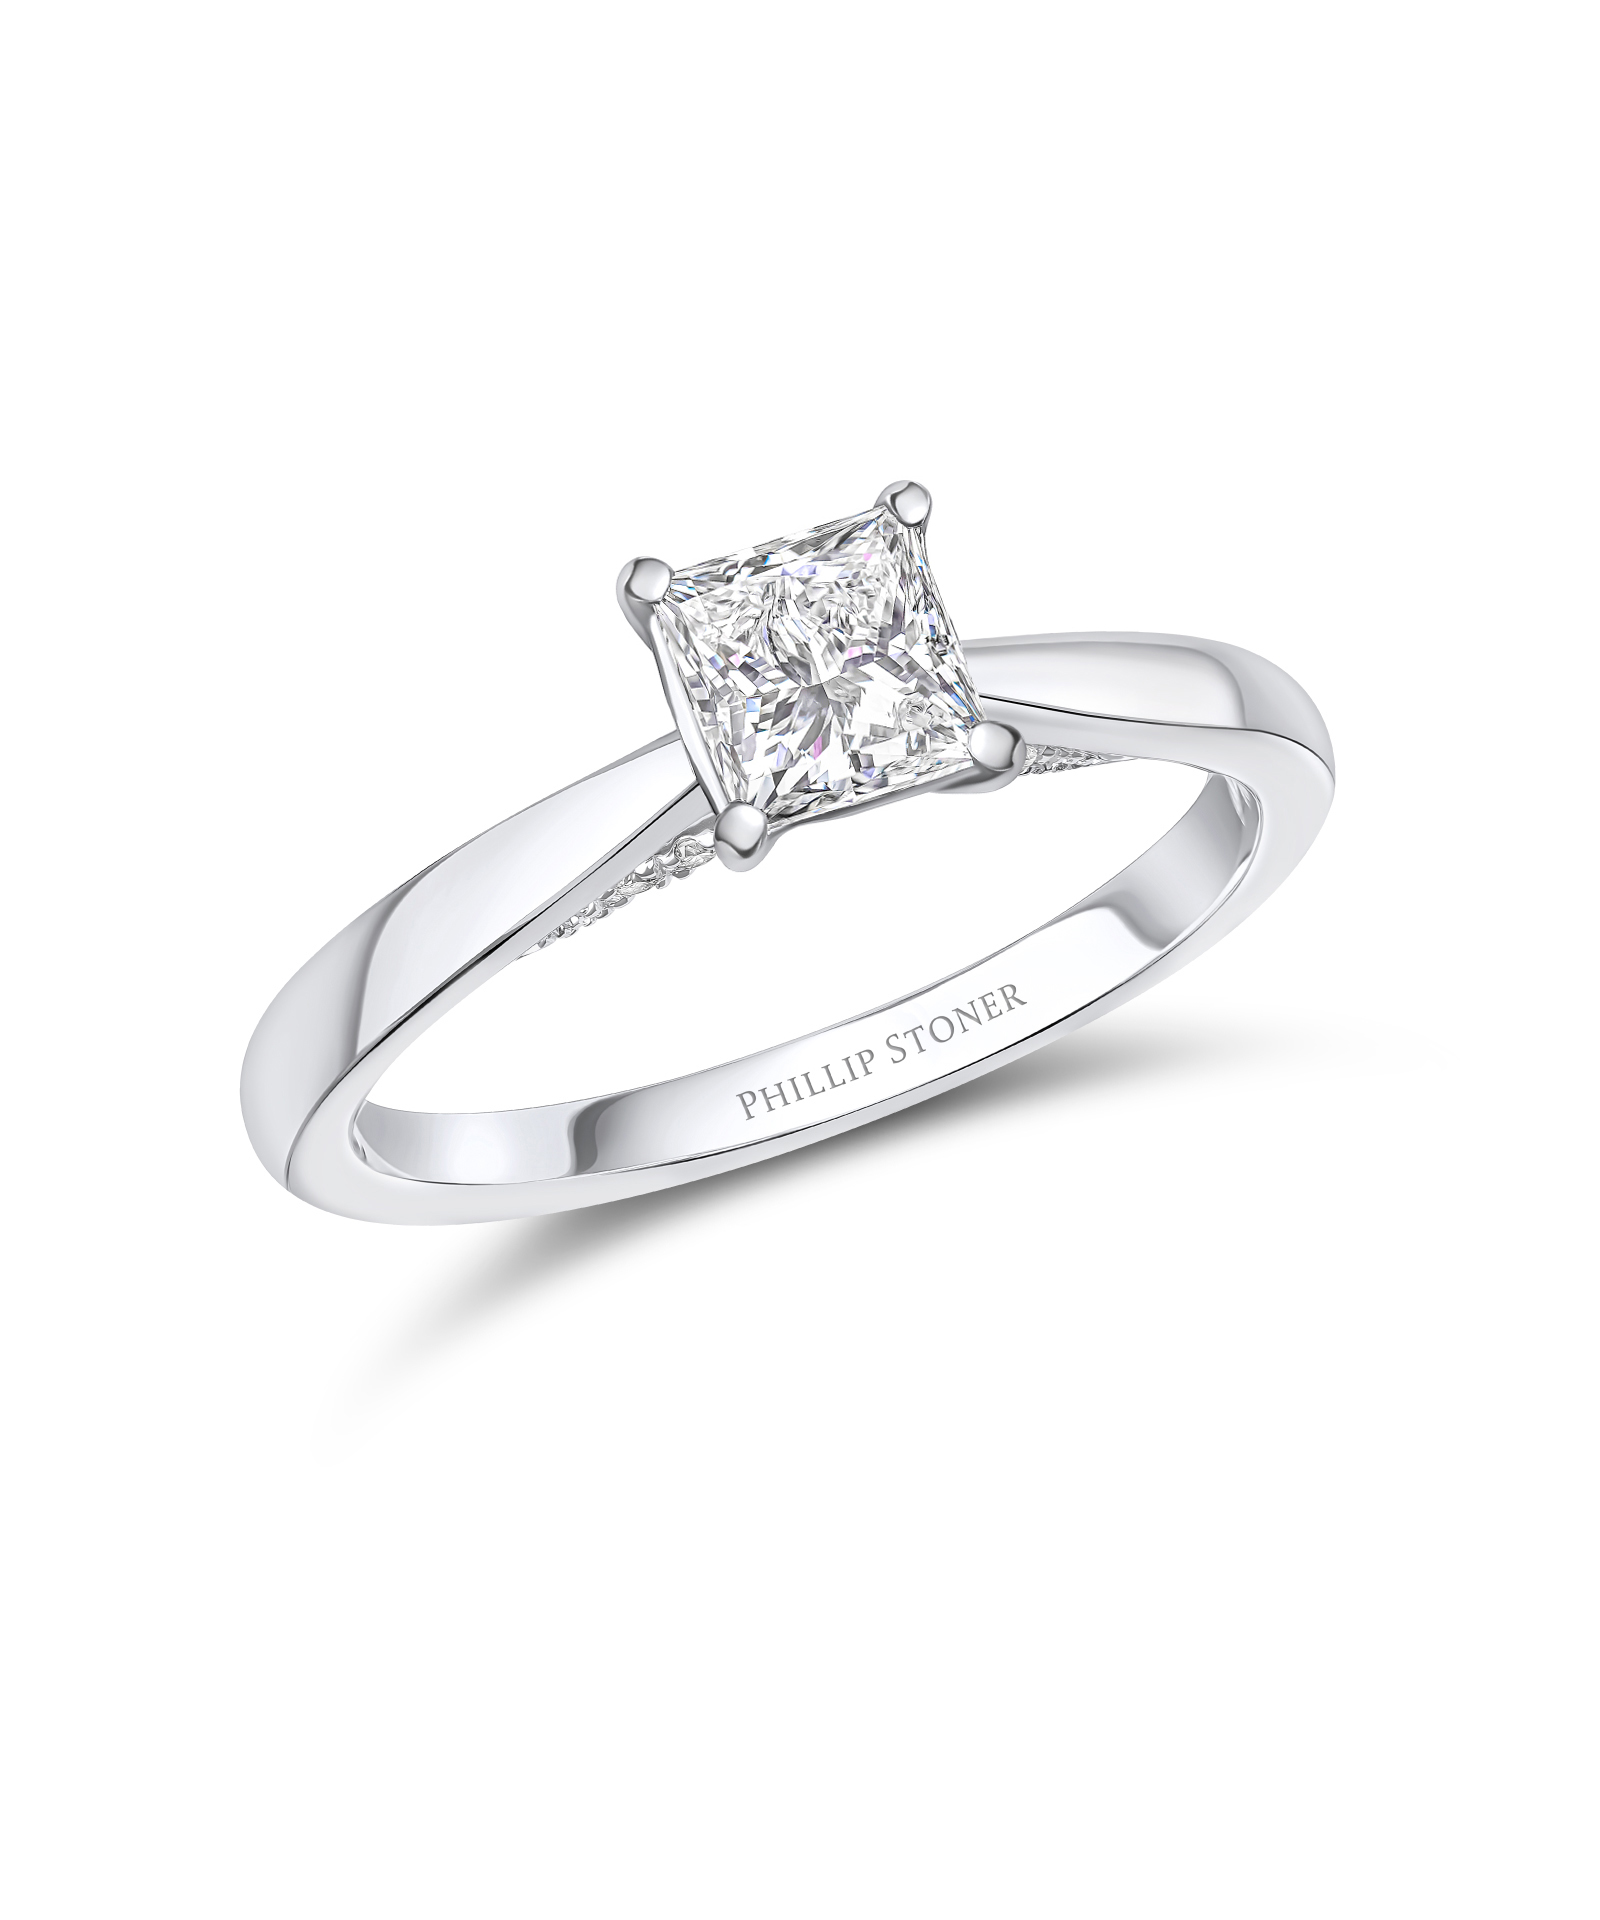 0.70ct Princess Cut Diamond Engagement Ring with Diamond Under Bezel - Phillip Stoner The Jeweller